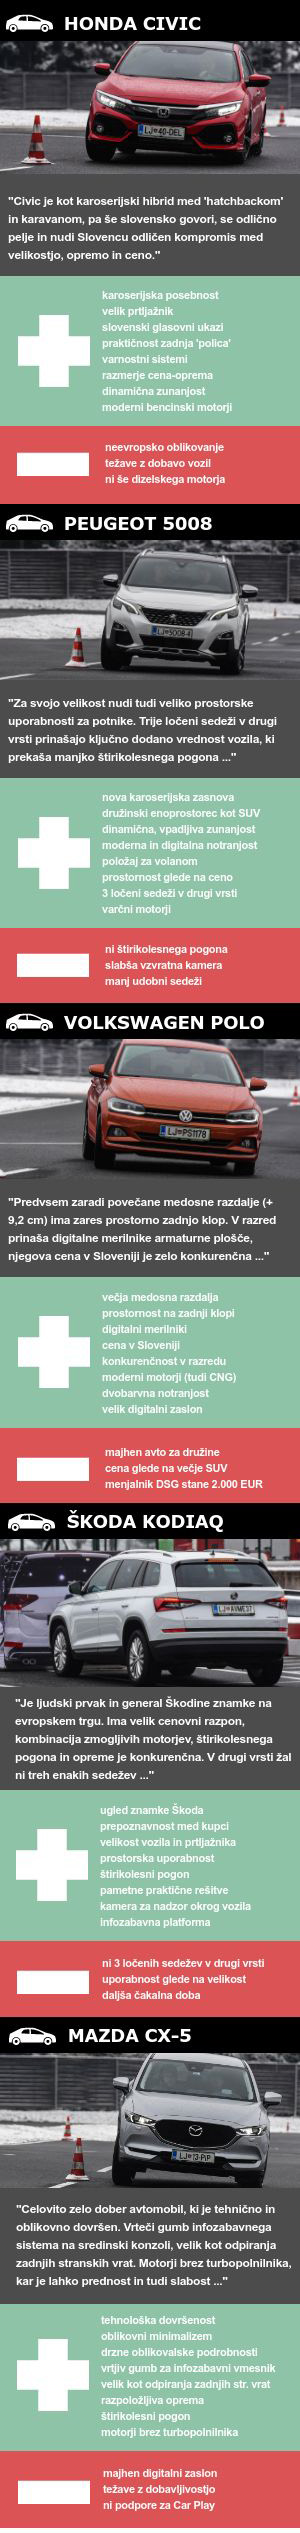 Slovenski avto leta 2018 infografika | Foto: 